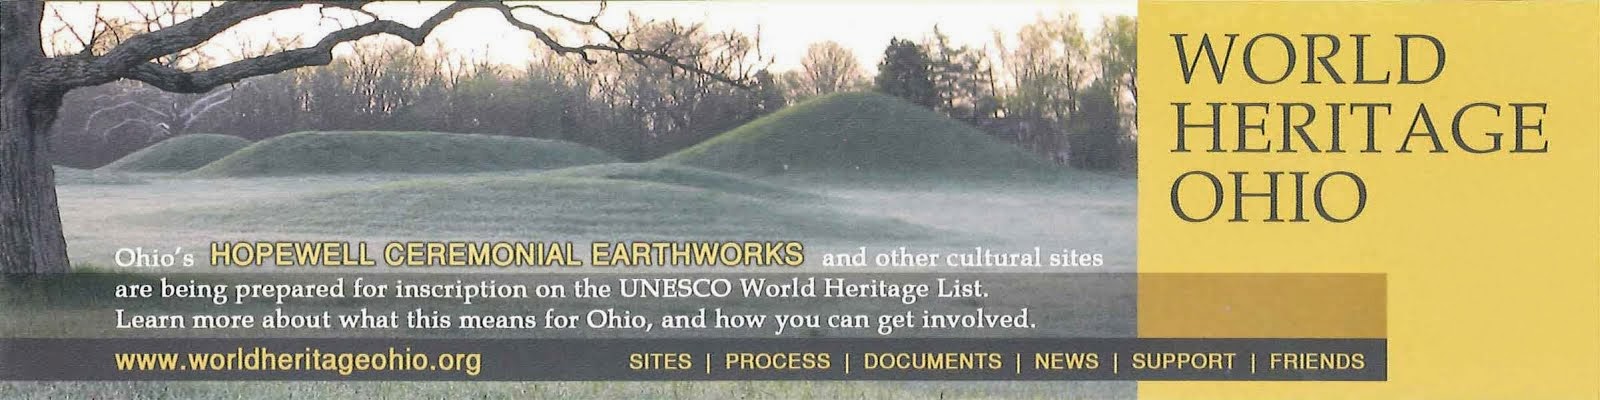 World Heritage Ohio